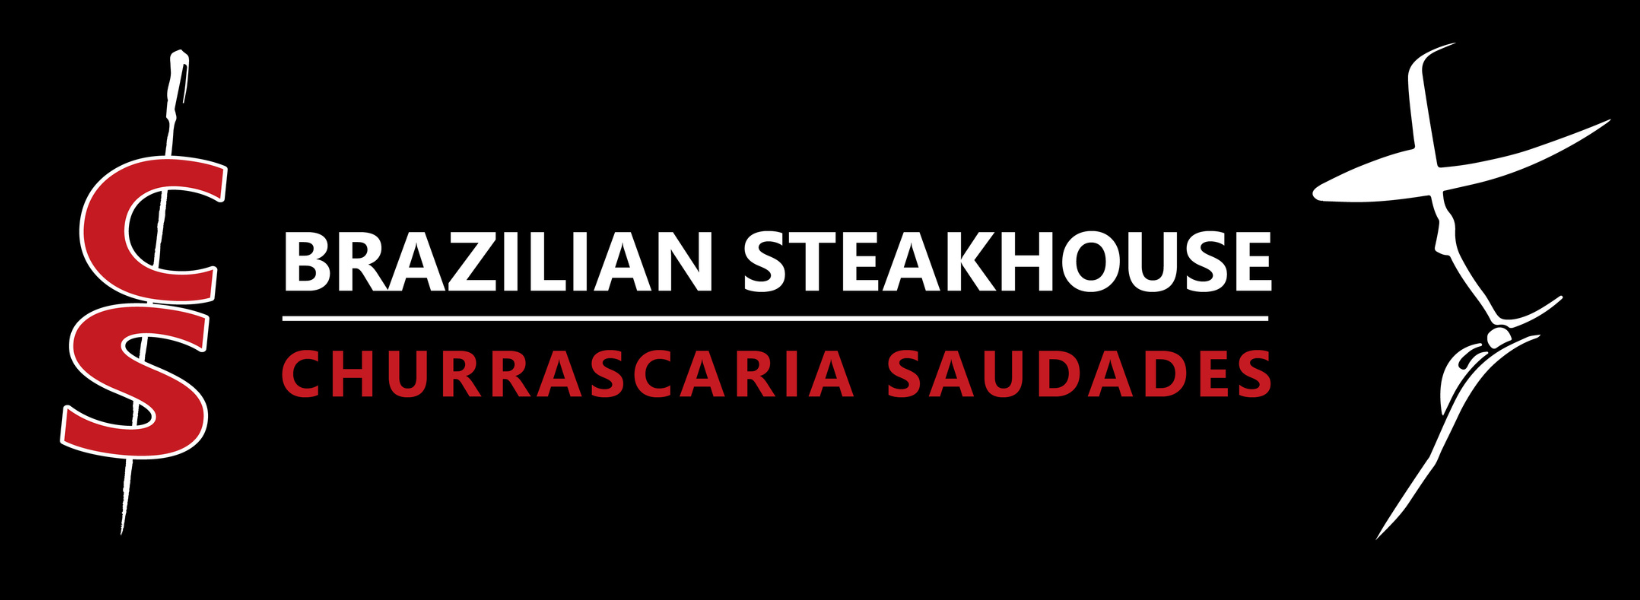 CS Brazilian Steakhouse